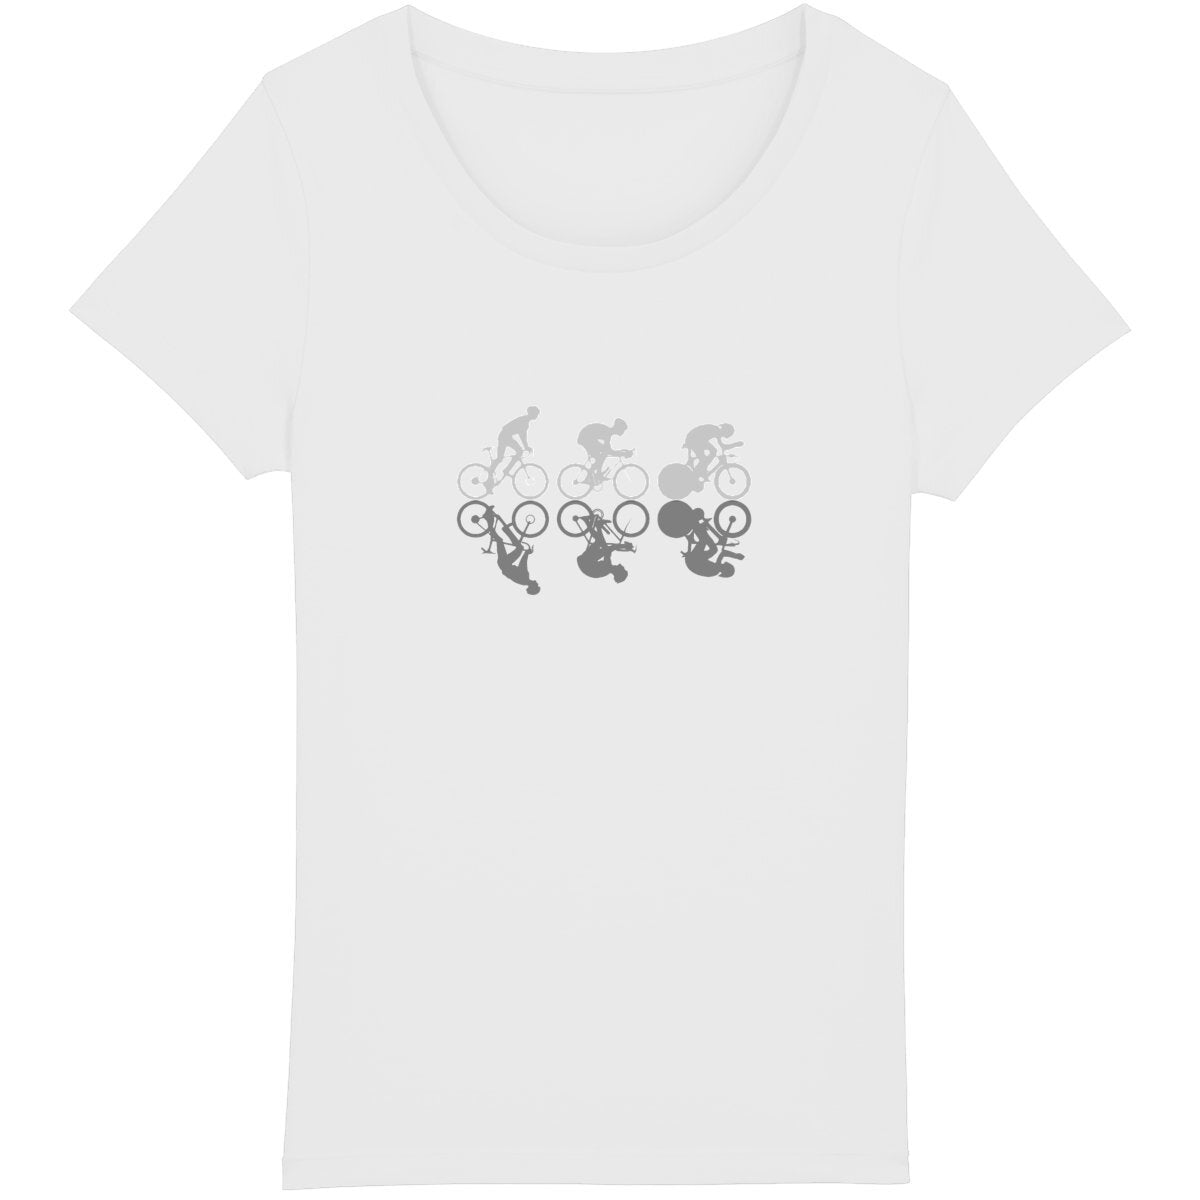 T-shirt cyclisme féminin avec trio de cyclistes dynamiques